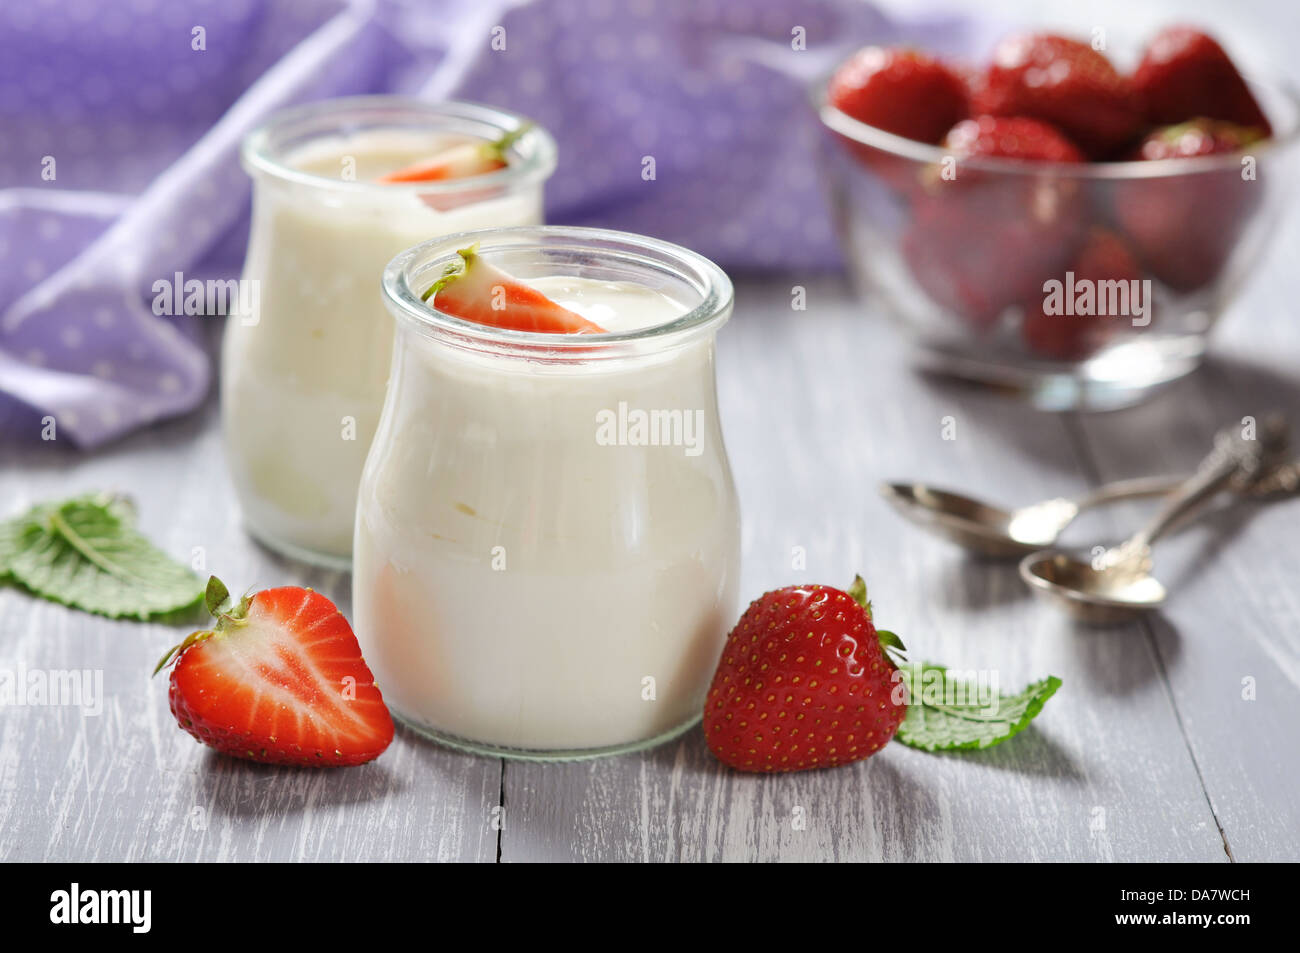 yogurt with ripe fresh strawberry in jars on wooden background Stock Photo